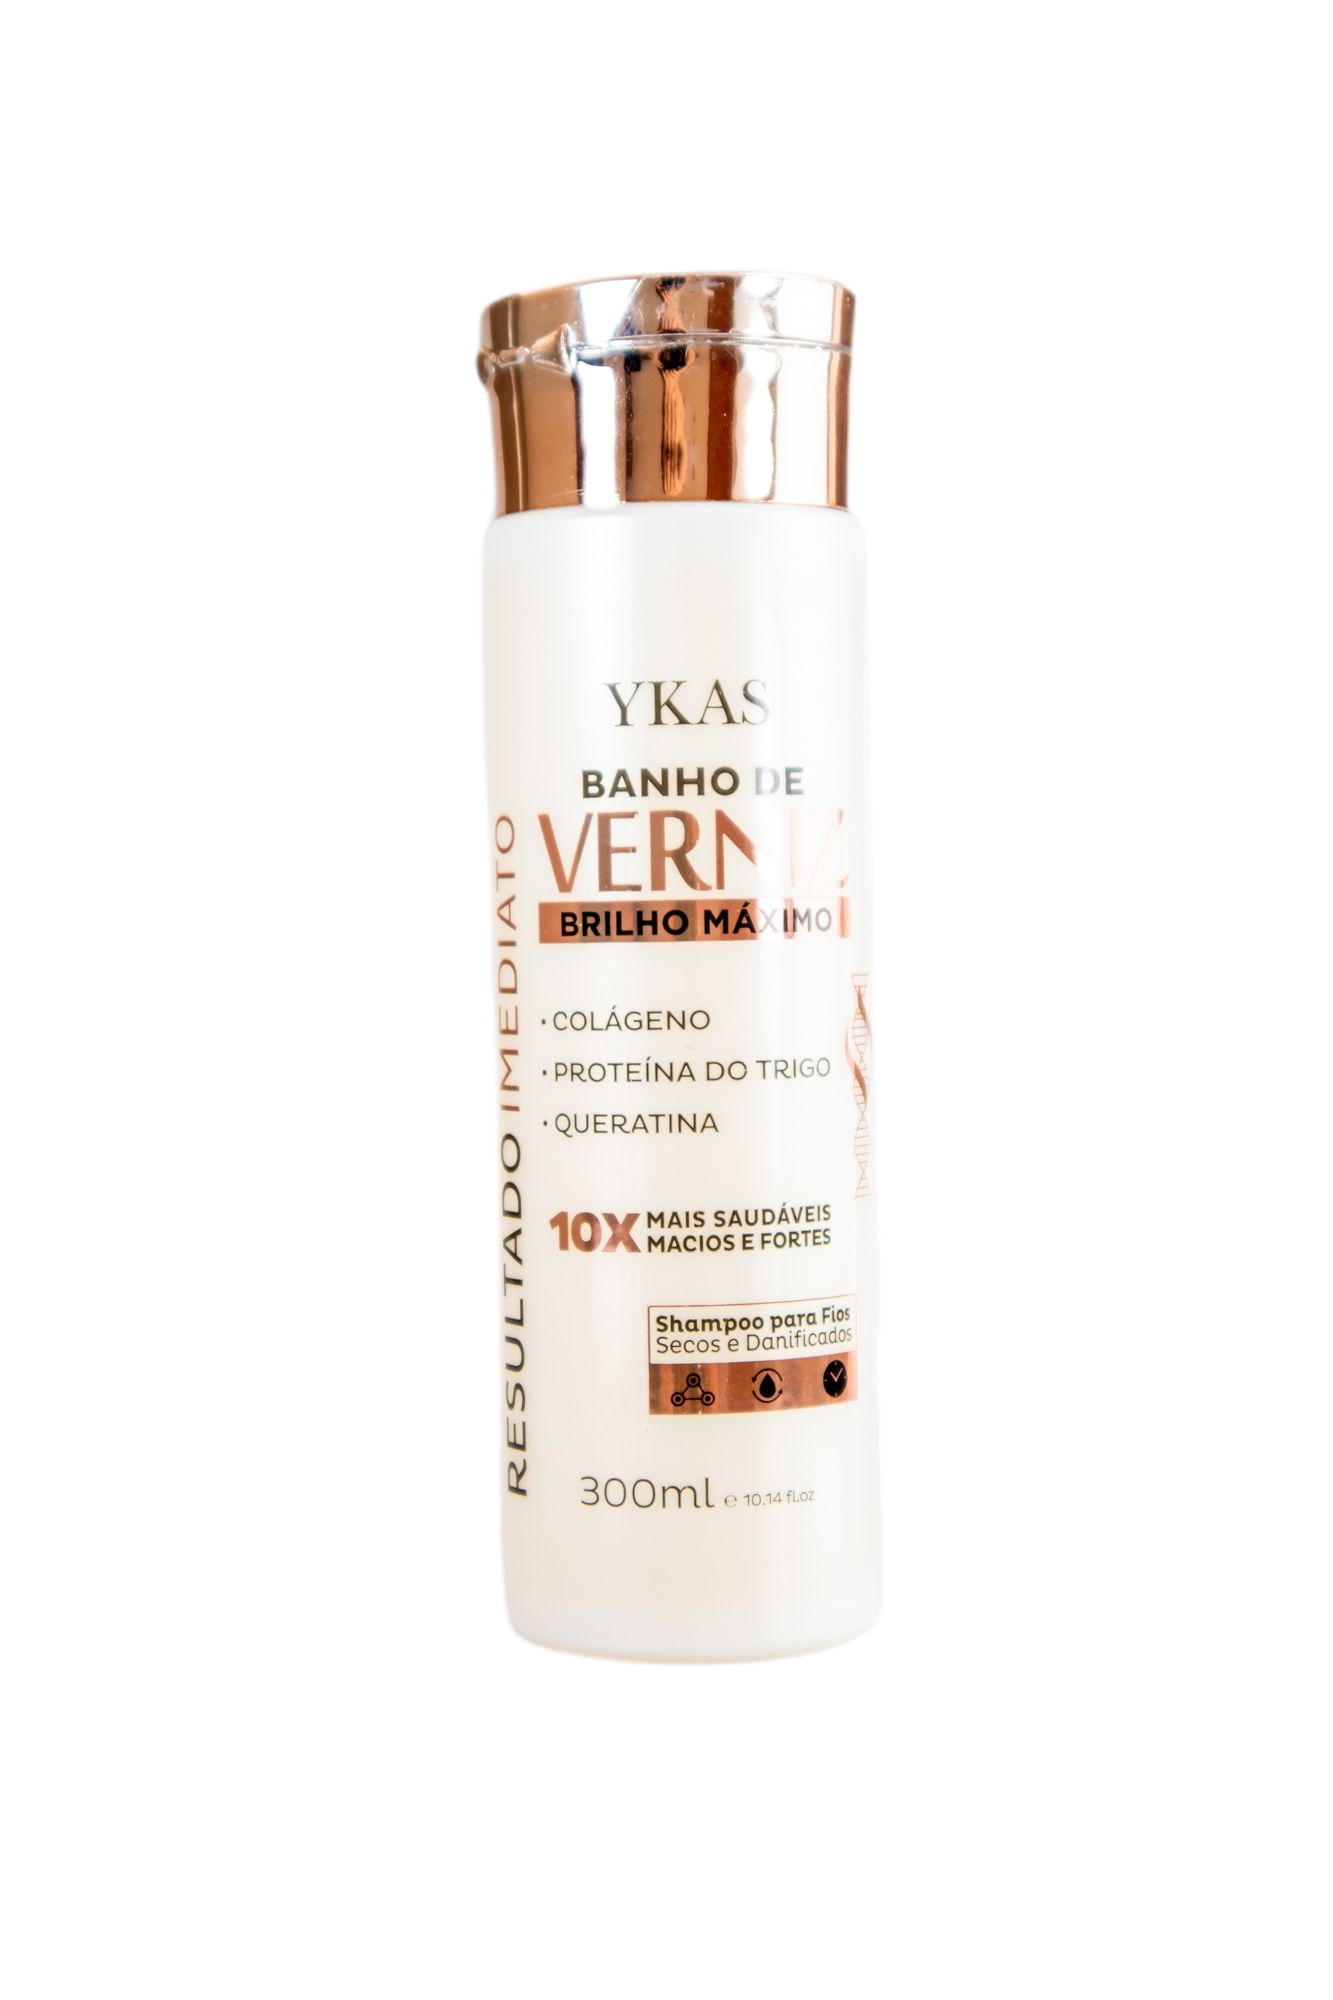 Ykas Home Care Varnish Bath Immediate Shampoo Keratin Collagen Wheat Protein 300ml - Ykas